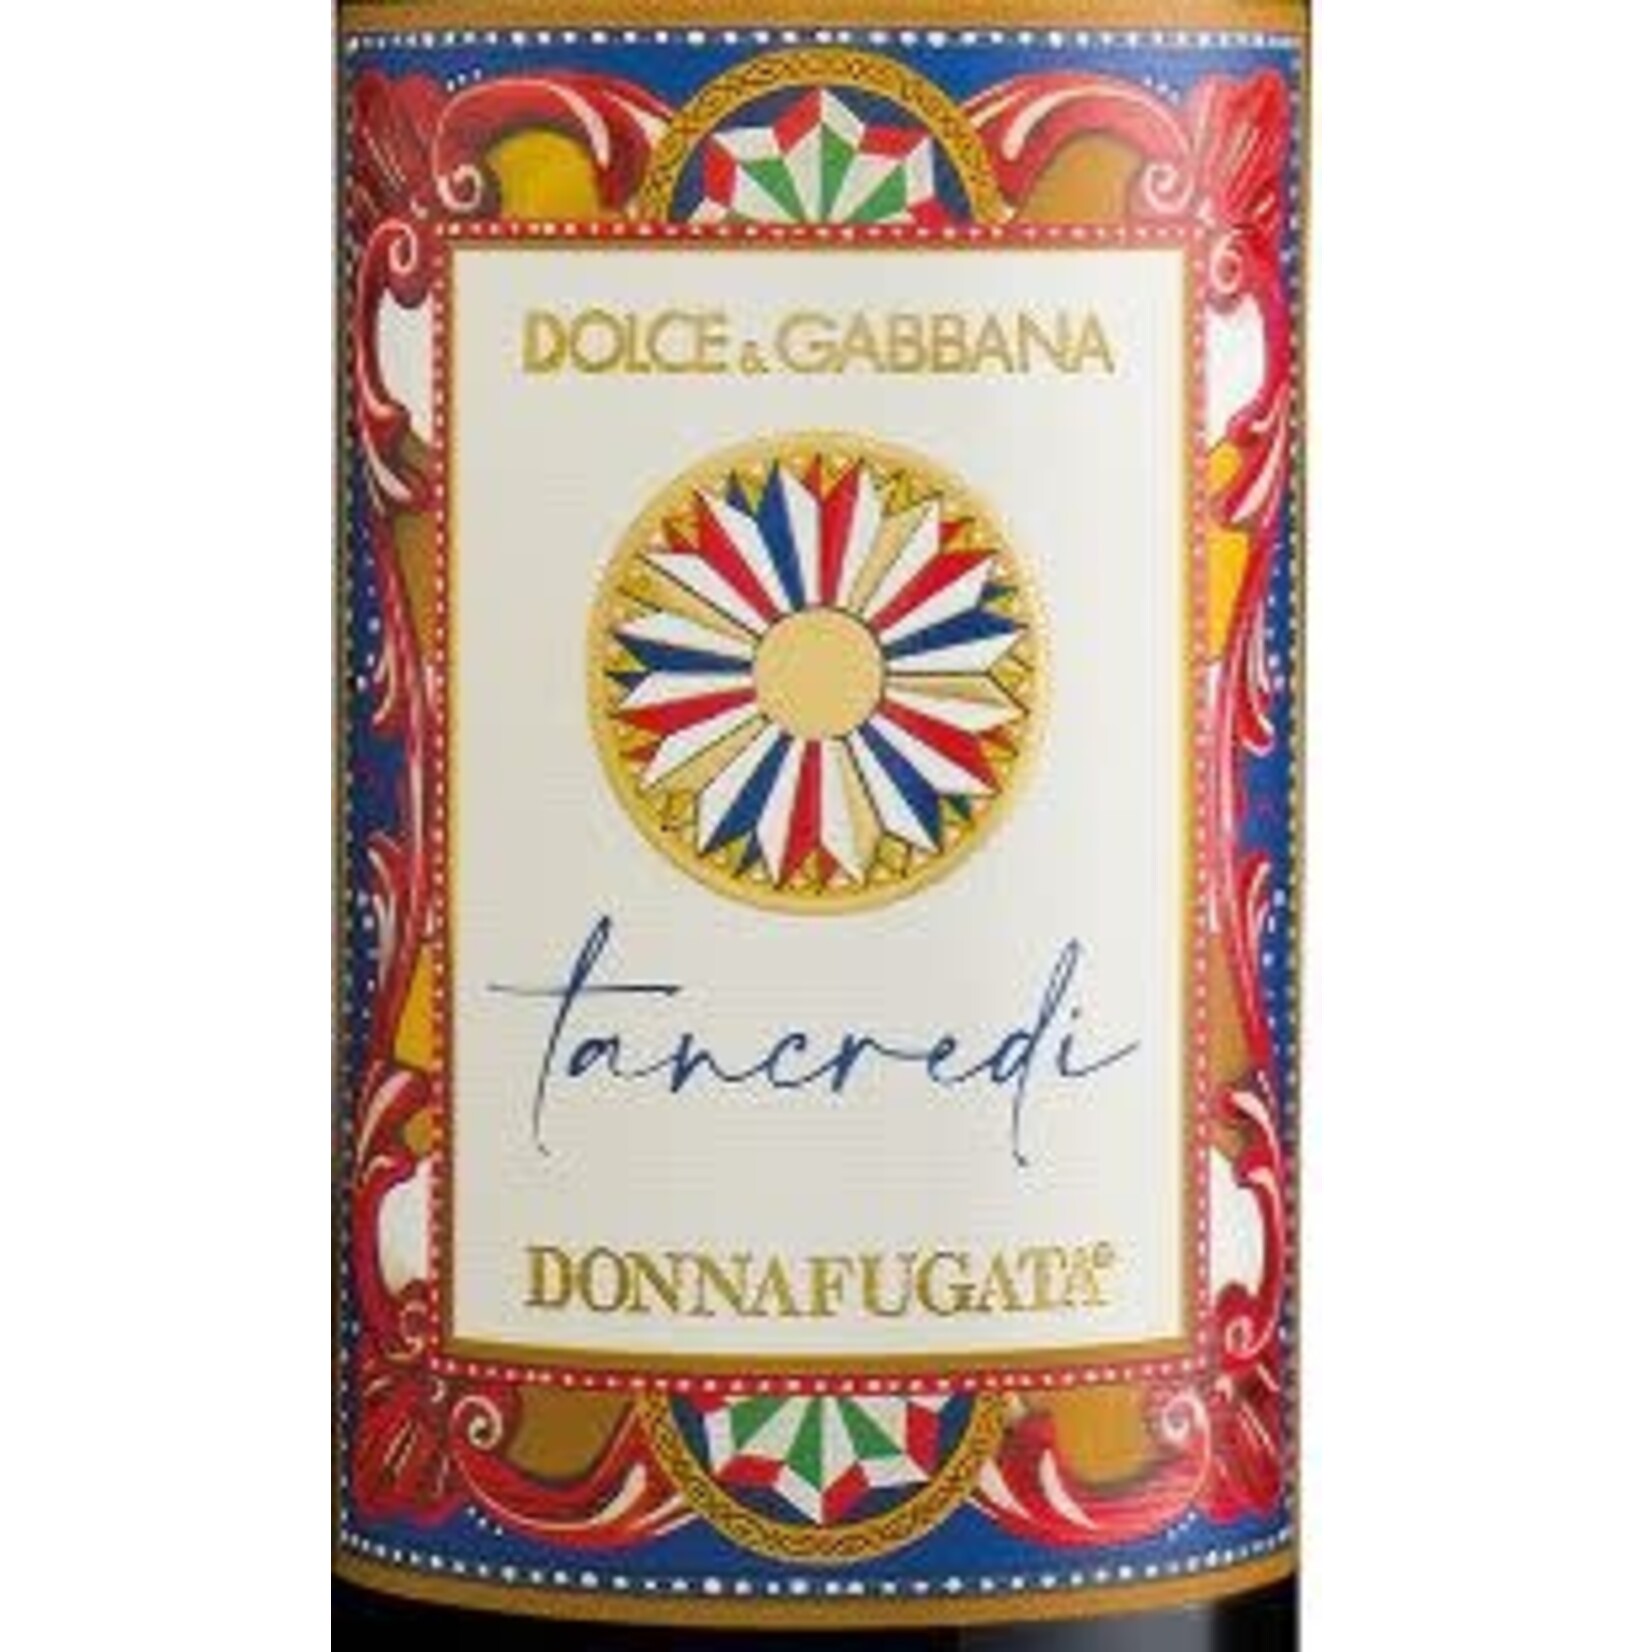 Donnafugata Tancredi Dolce & Gabbana and Donnafugata